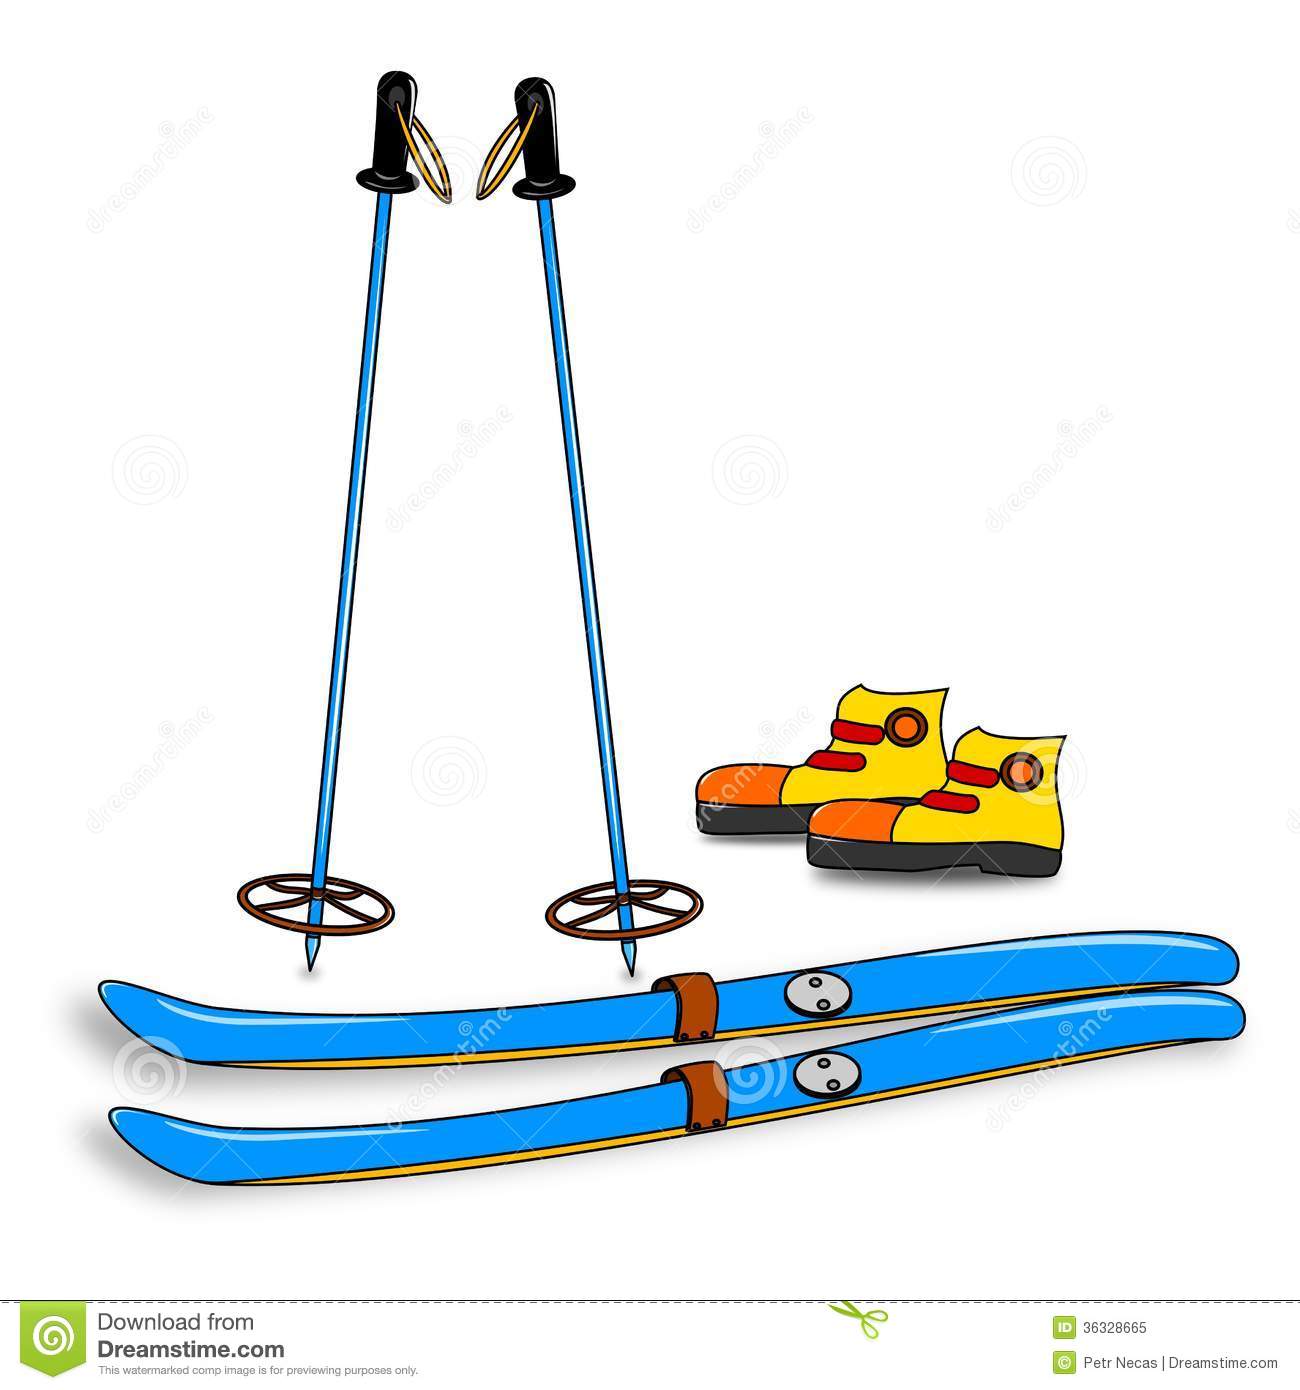 skis clipart ski gear